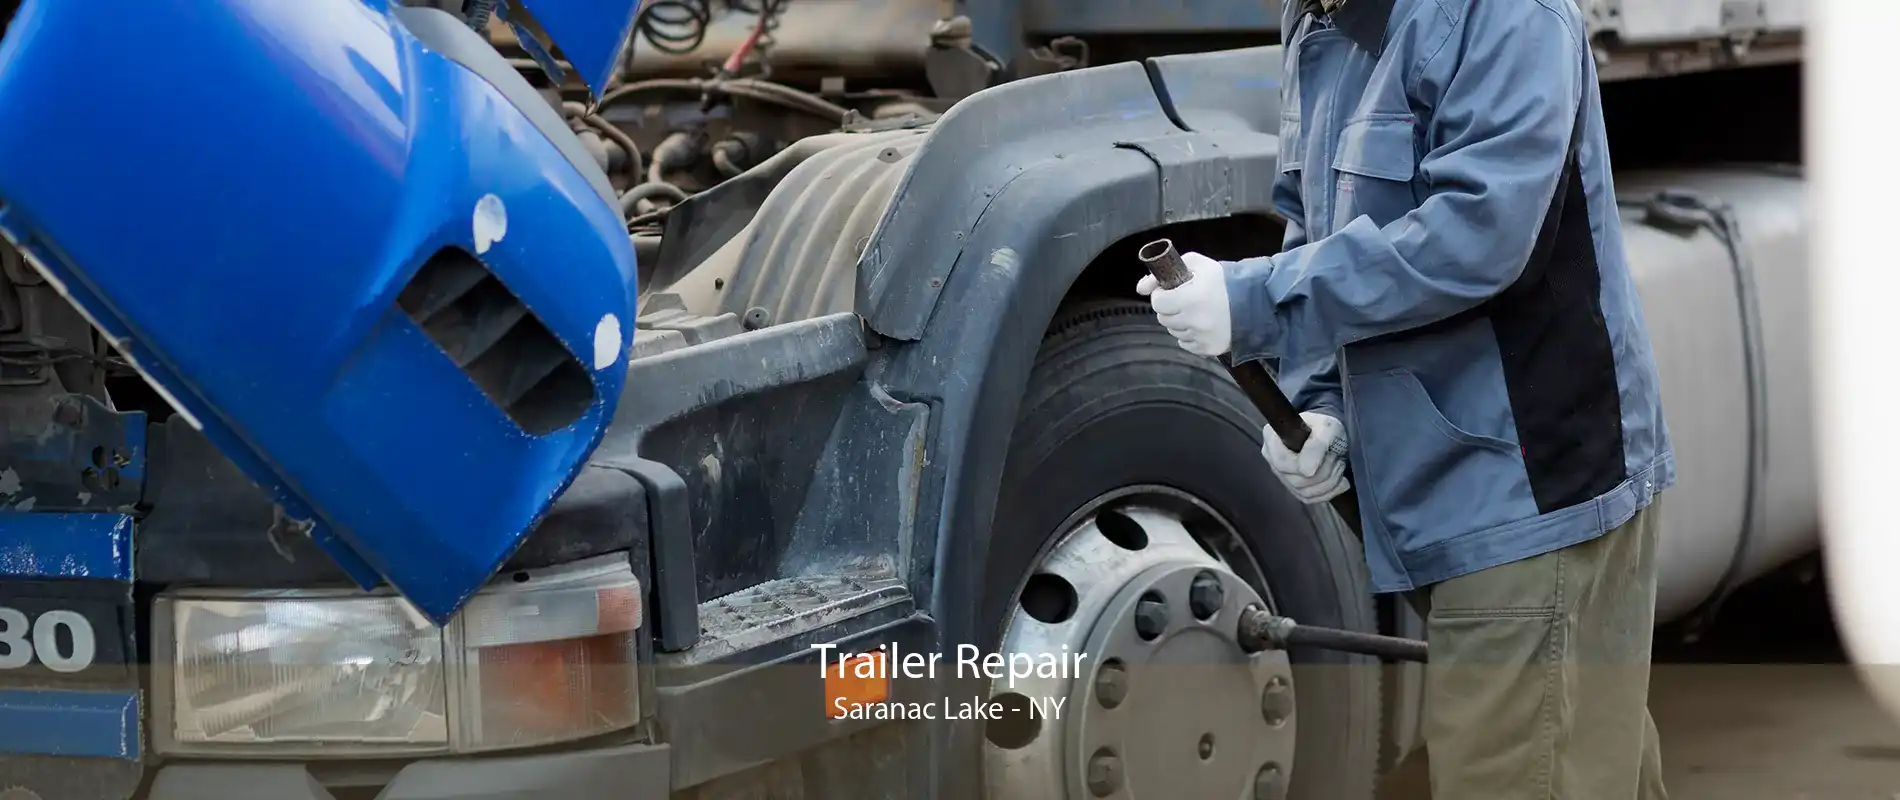 Trailer Repair Saranac Lake - NY